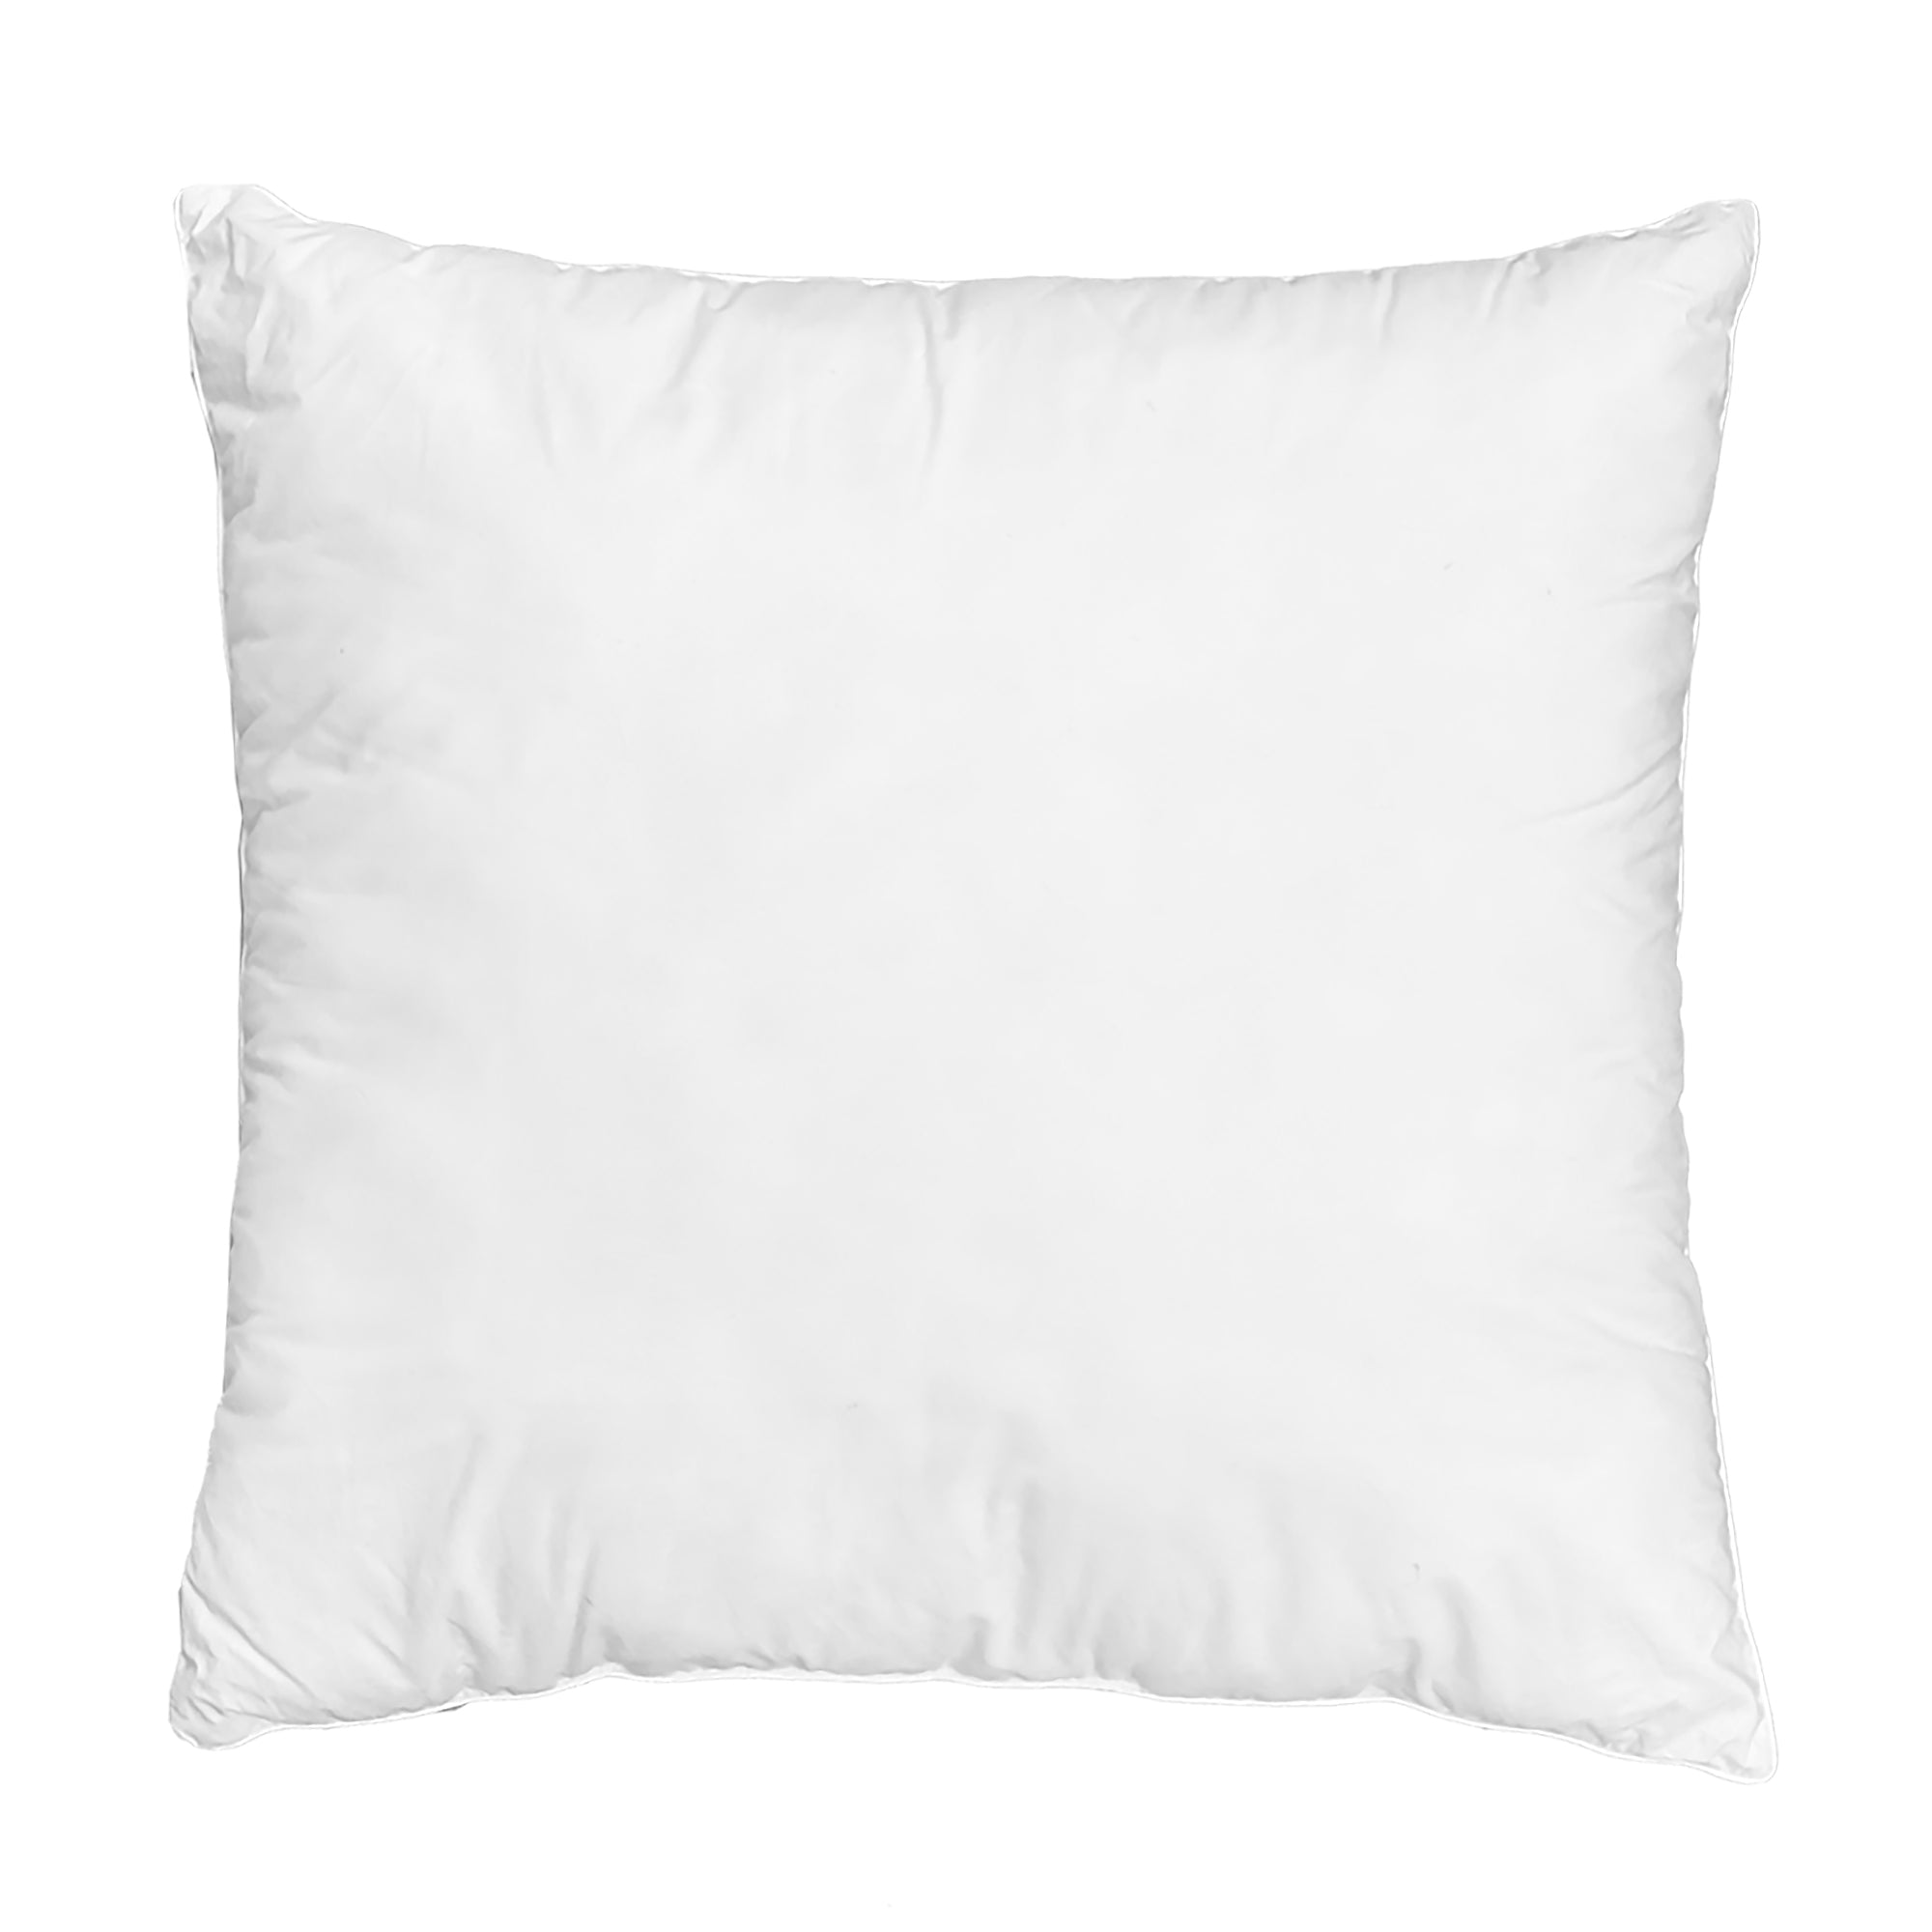 Chateau Micro-Down Pillow - Euro